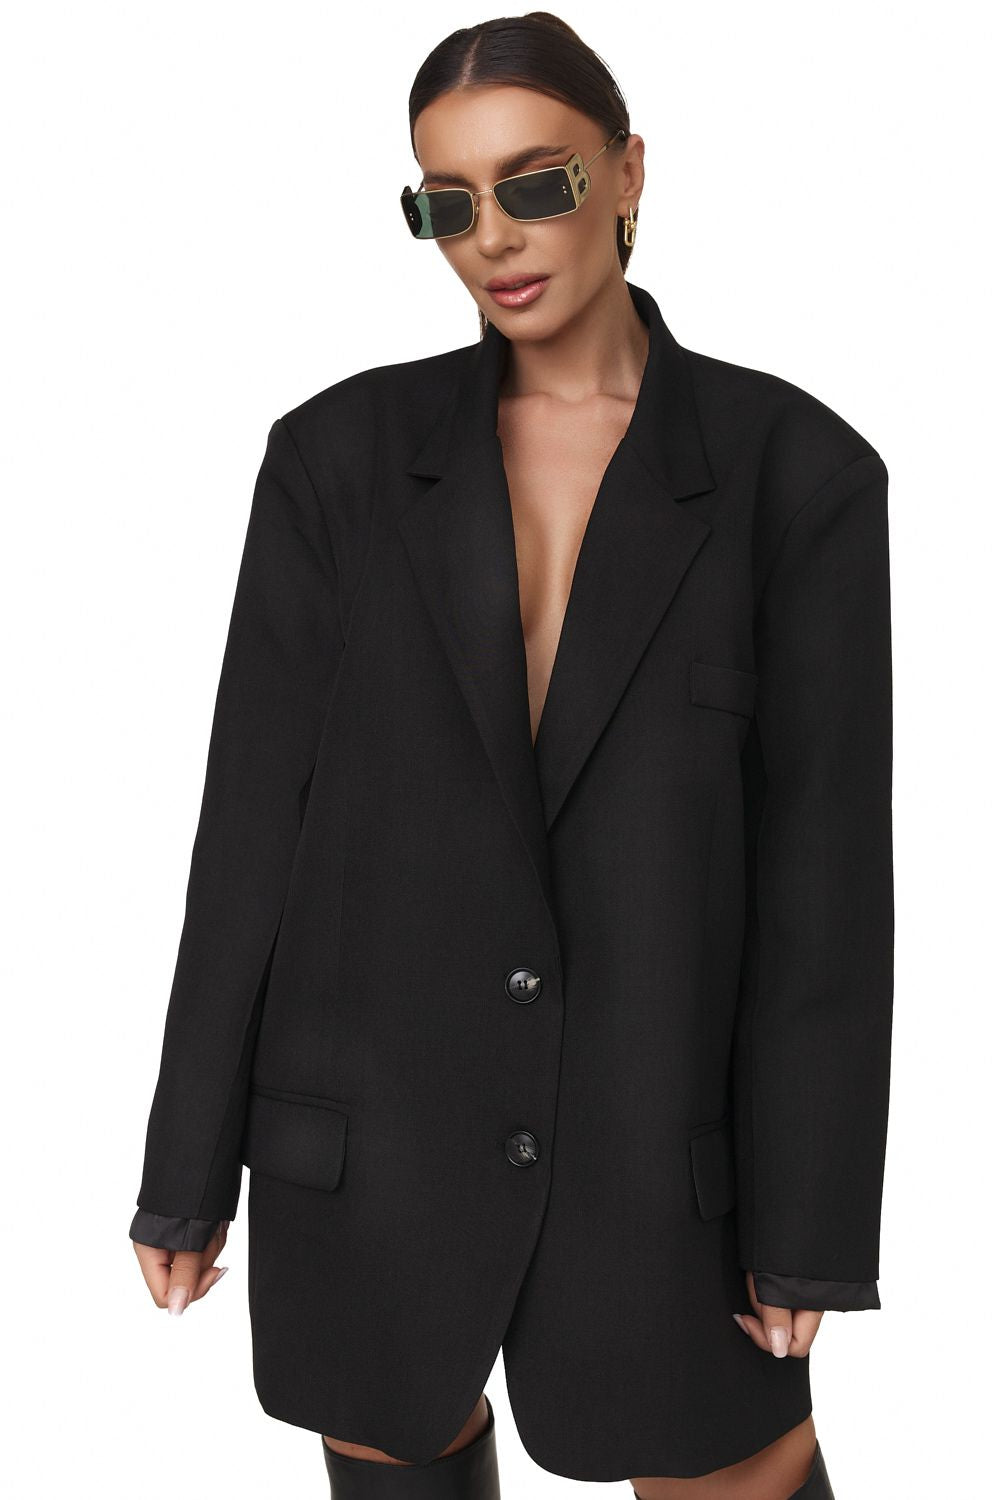 Elegant black ladies jacket Crila Bogas